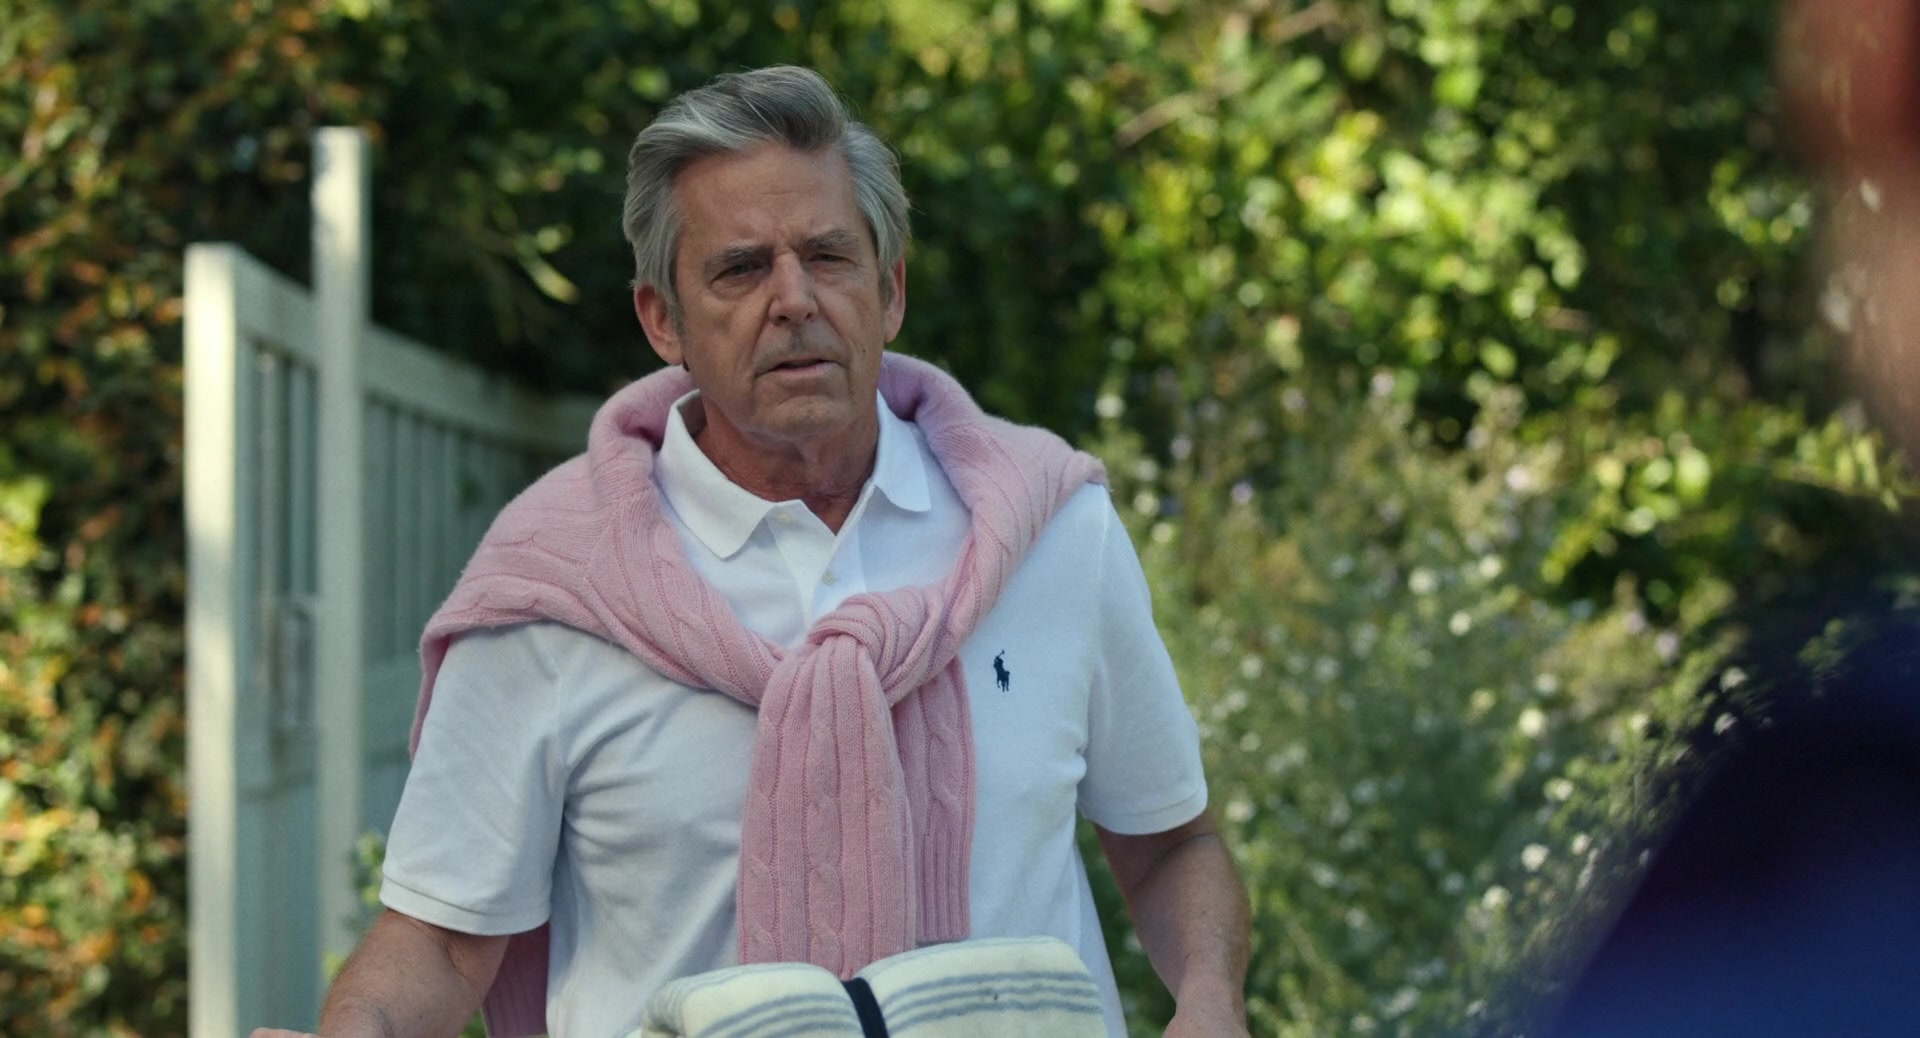 Ralph Lauren White Polo Shirt Worn By Actor In The Shrink Next Door S01E05  